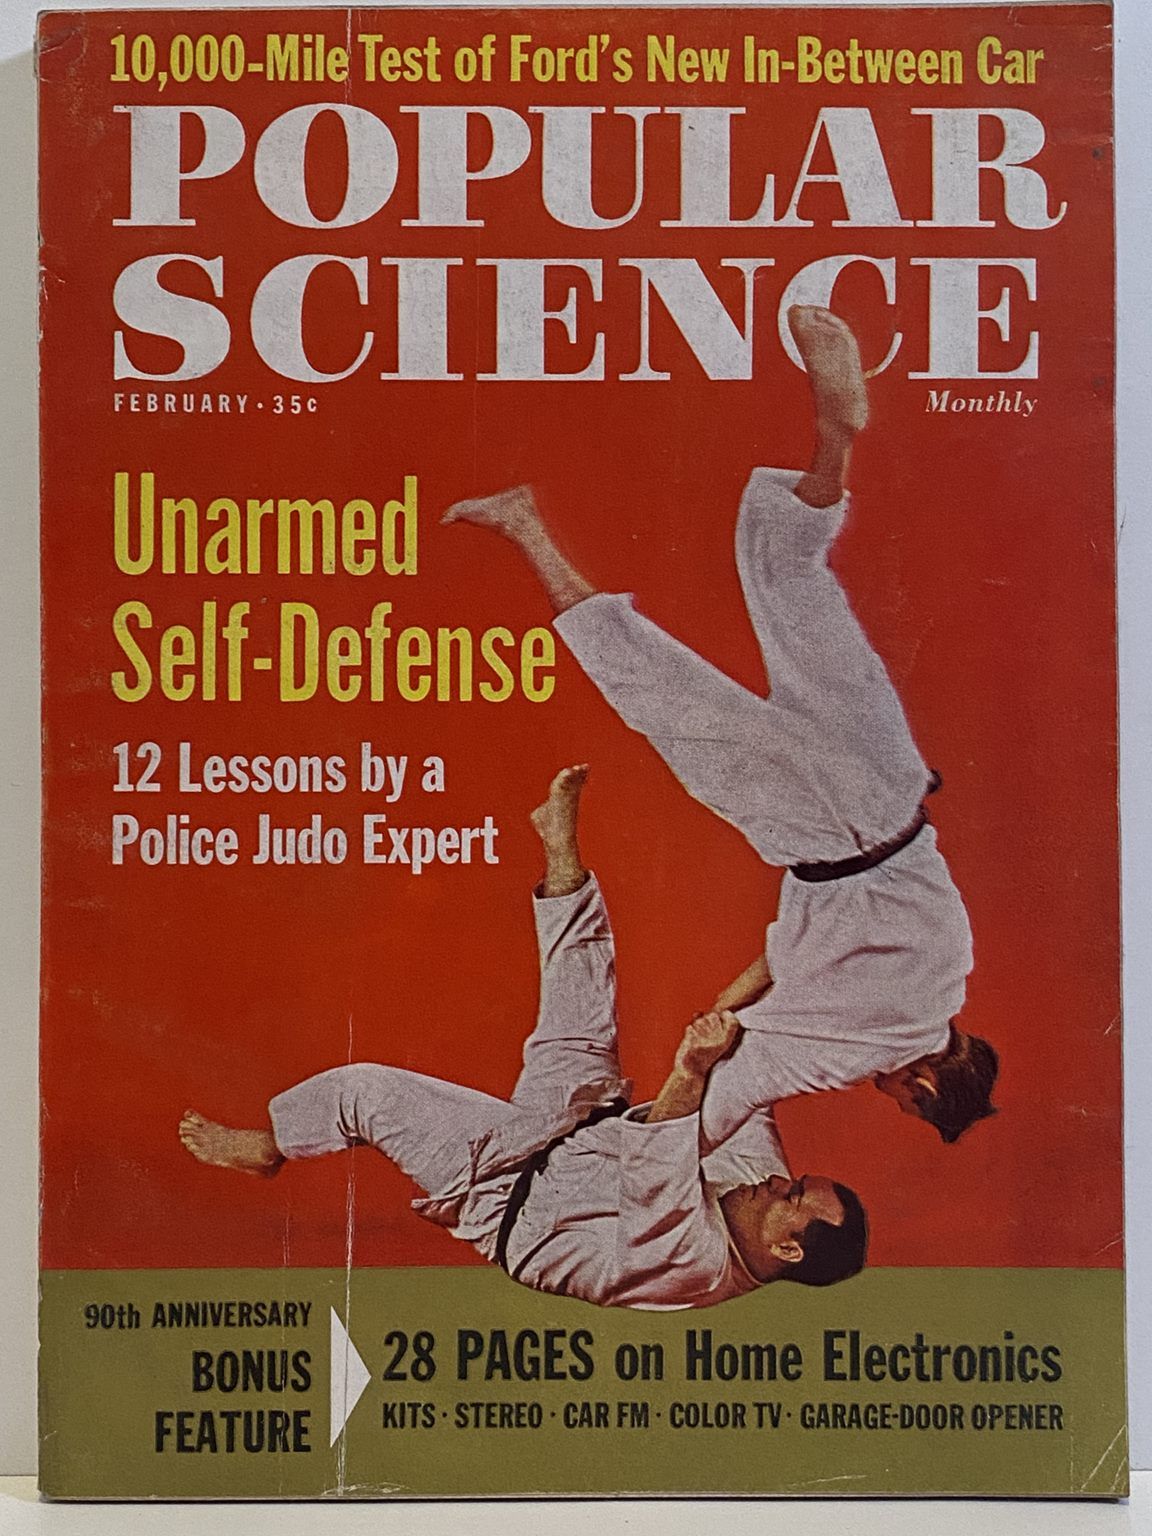 VINTAGE MAGAZINE: Popular Science, Vol. 180, No. 2 - February 1962